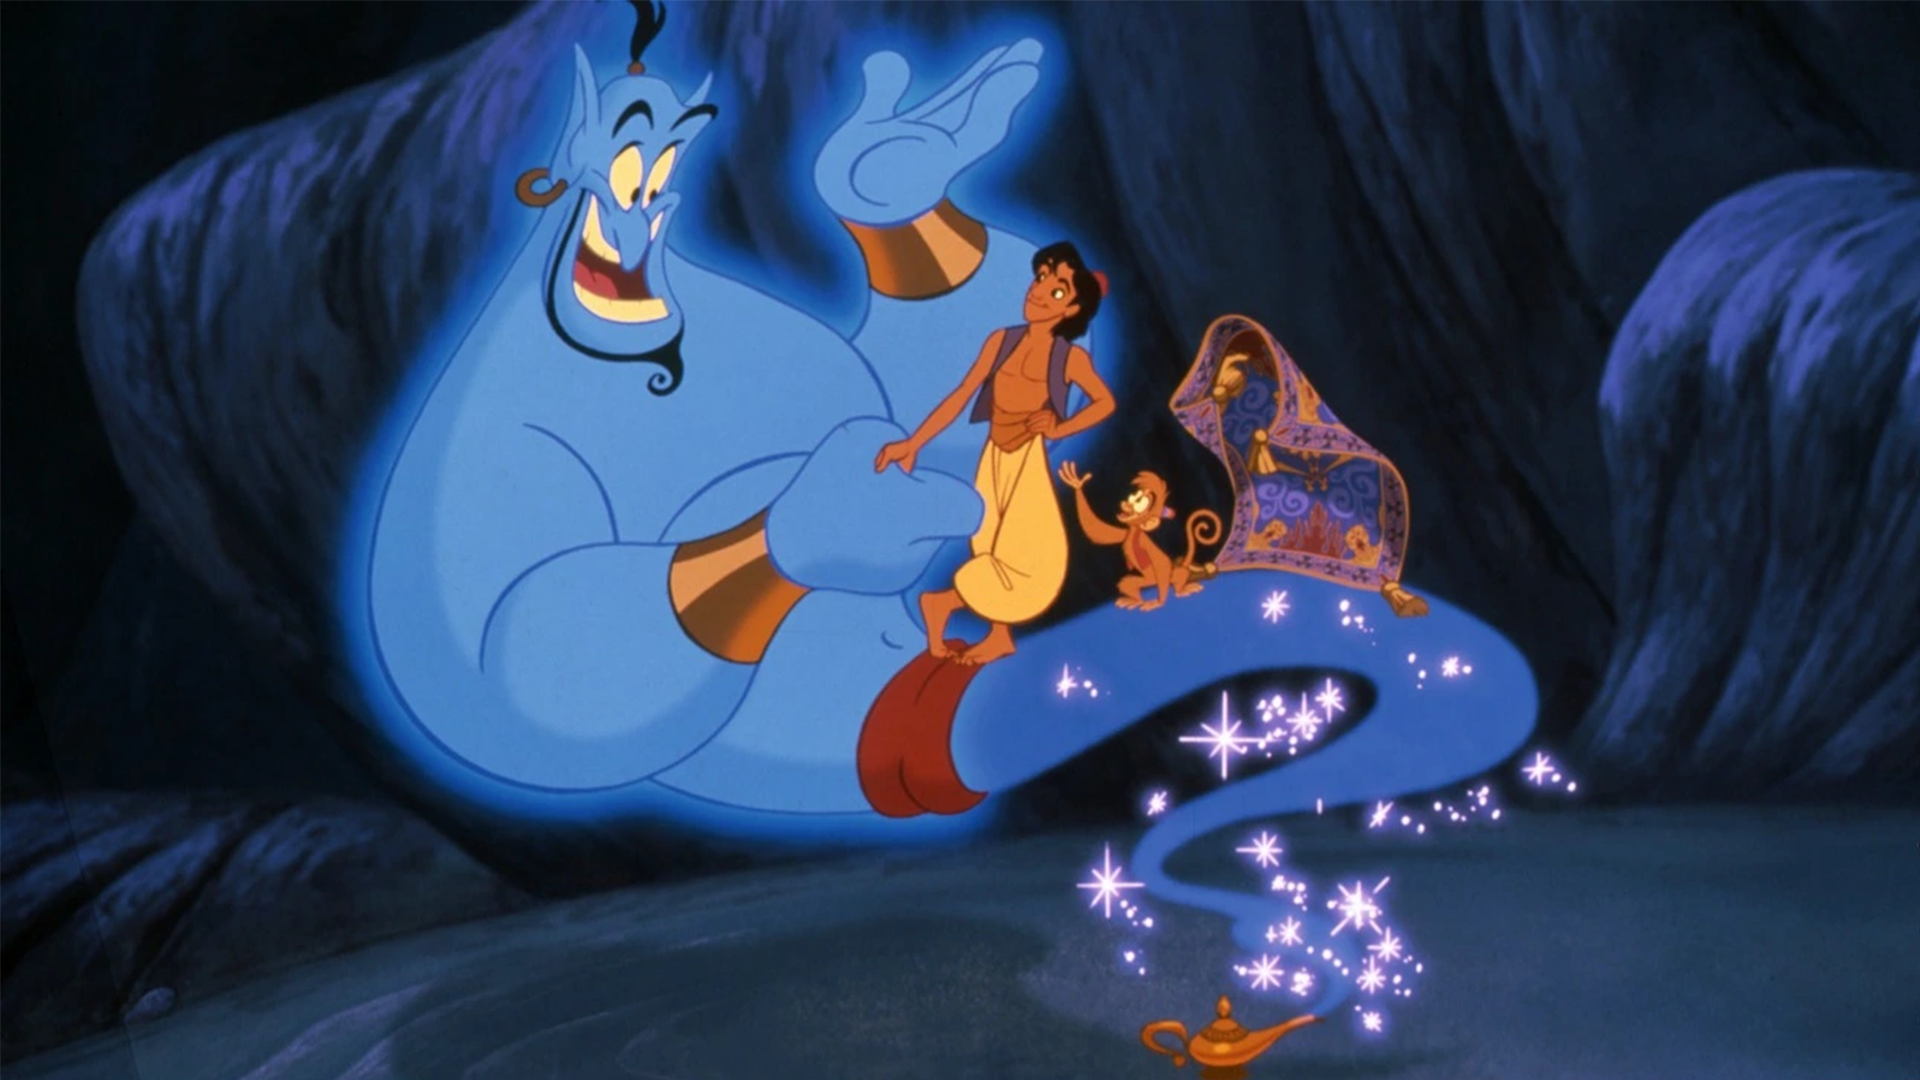 A still from Aladdin (1992) with Aladdin, Abu, Carpet, and the Genie